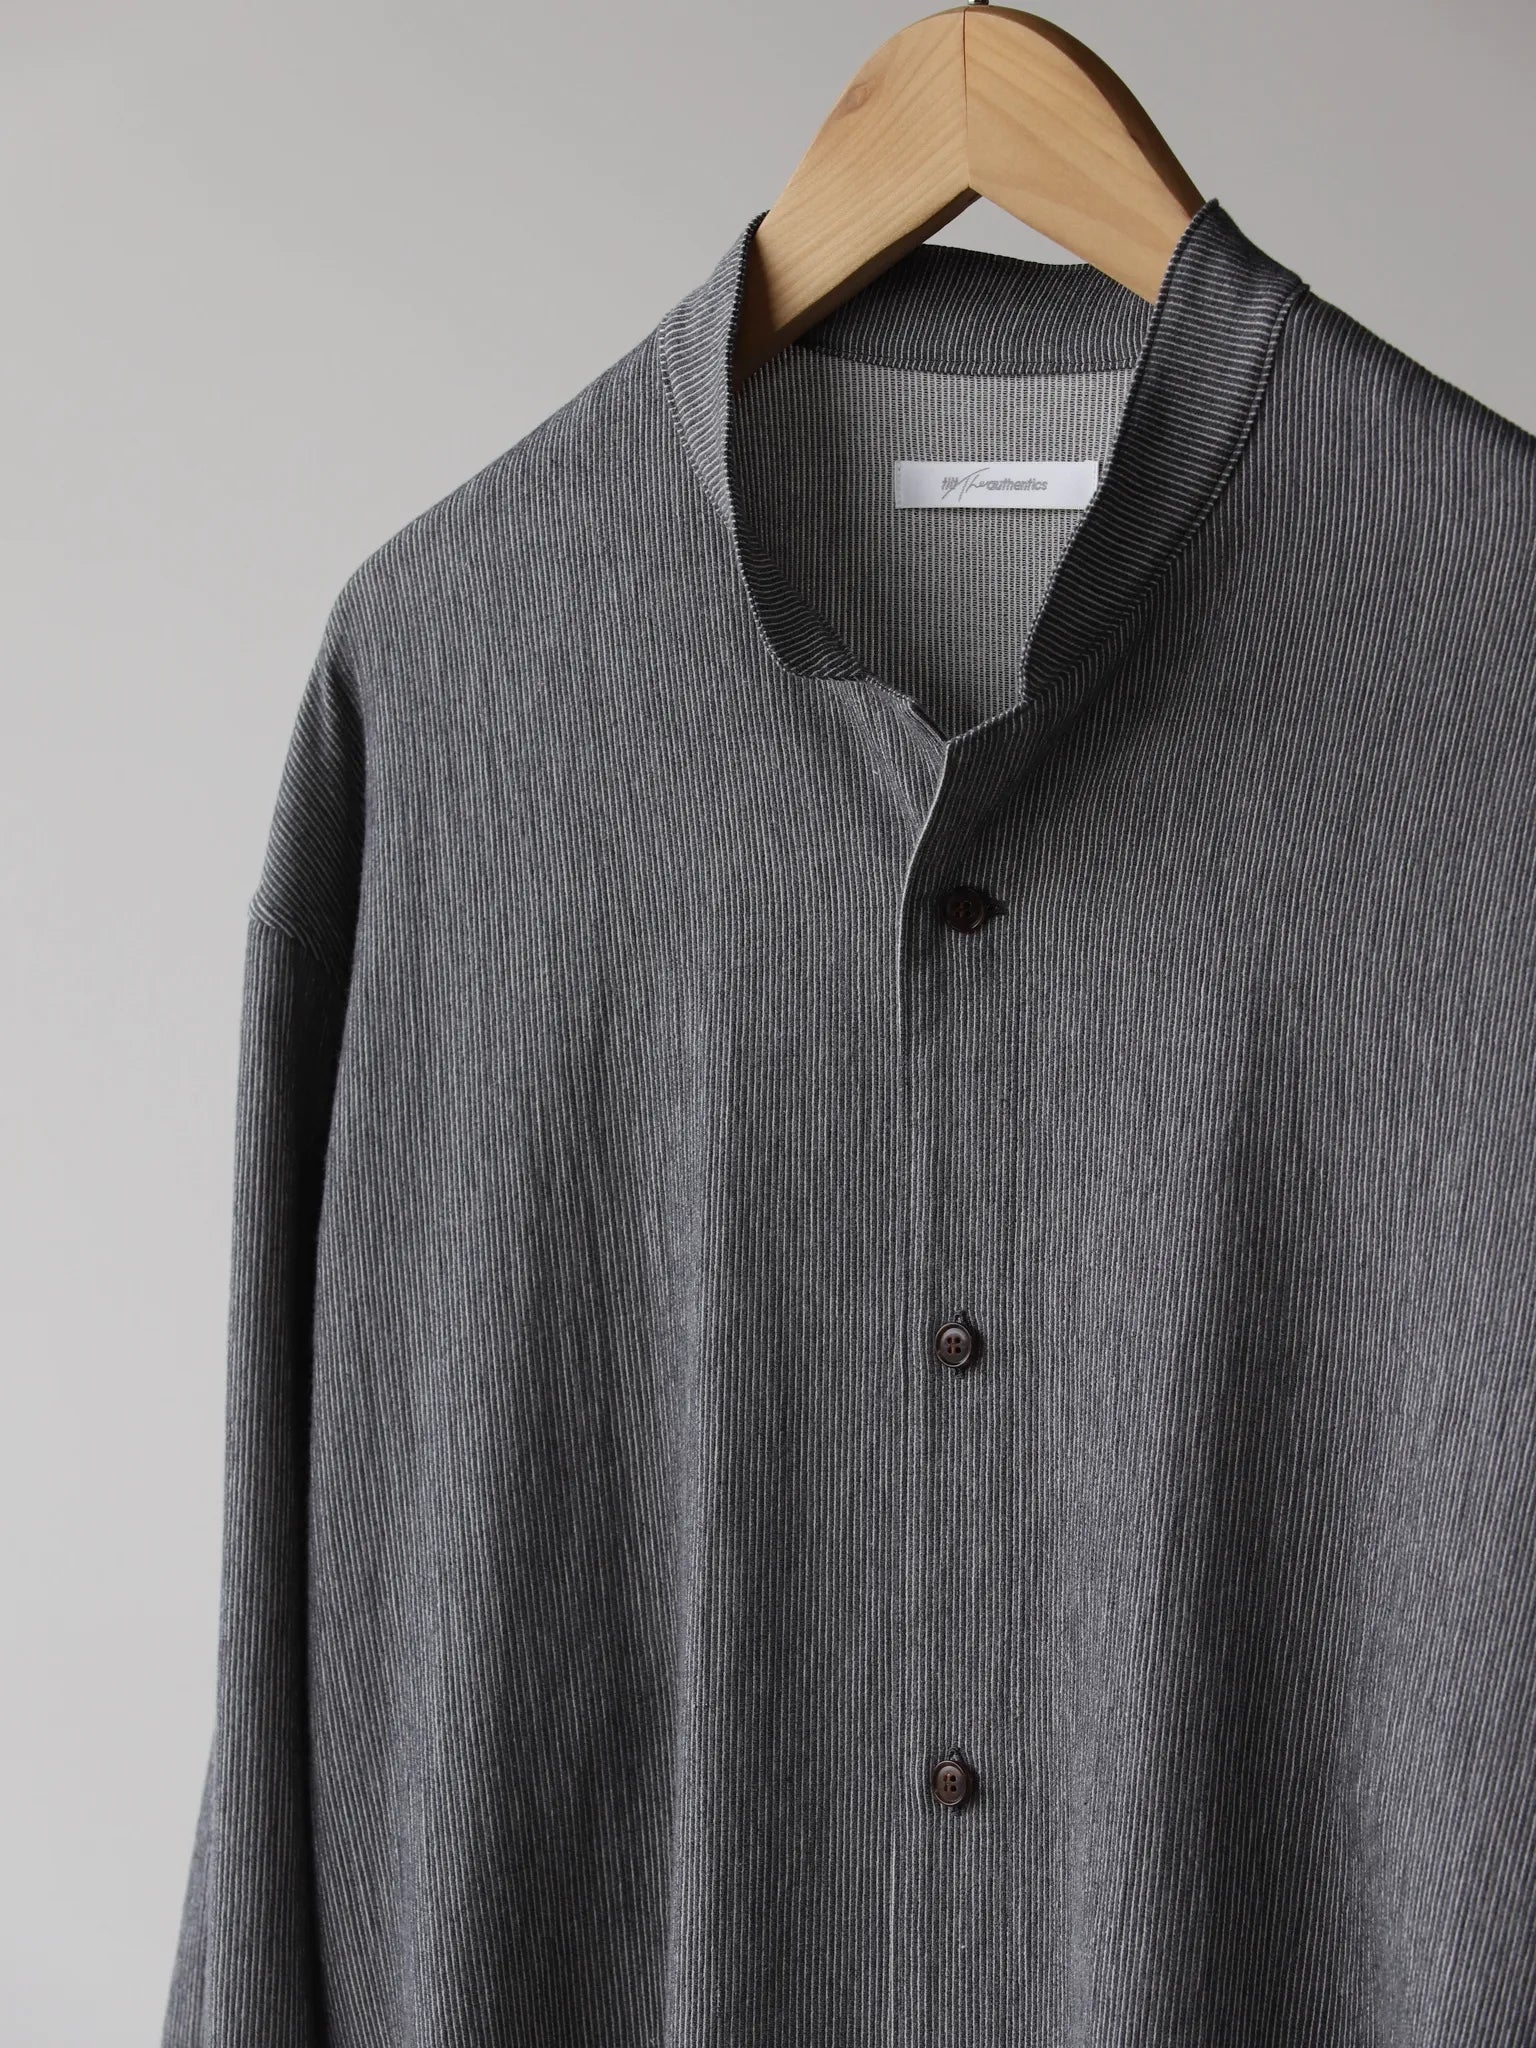 tilt-the-authentics-top-pique-stand-collar-shirt-gray-3